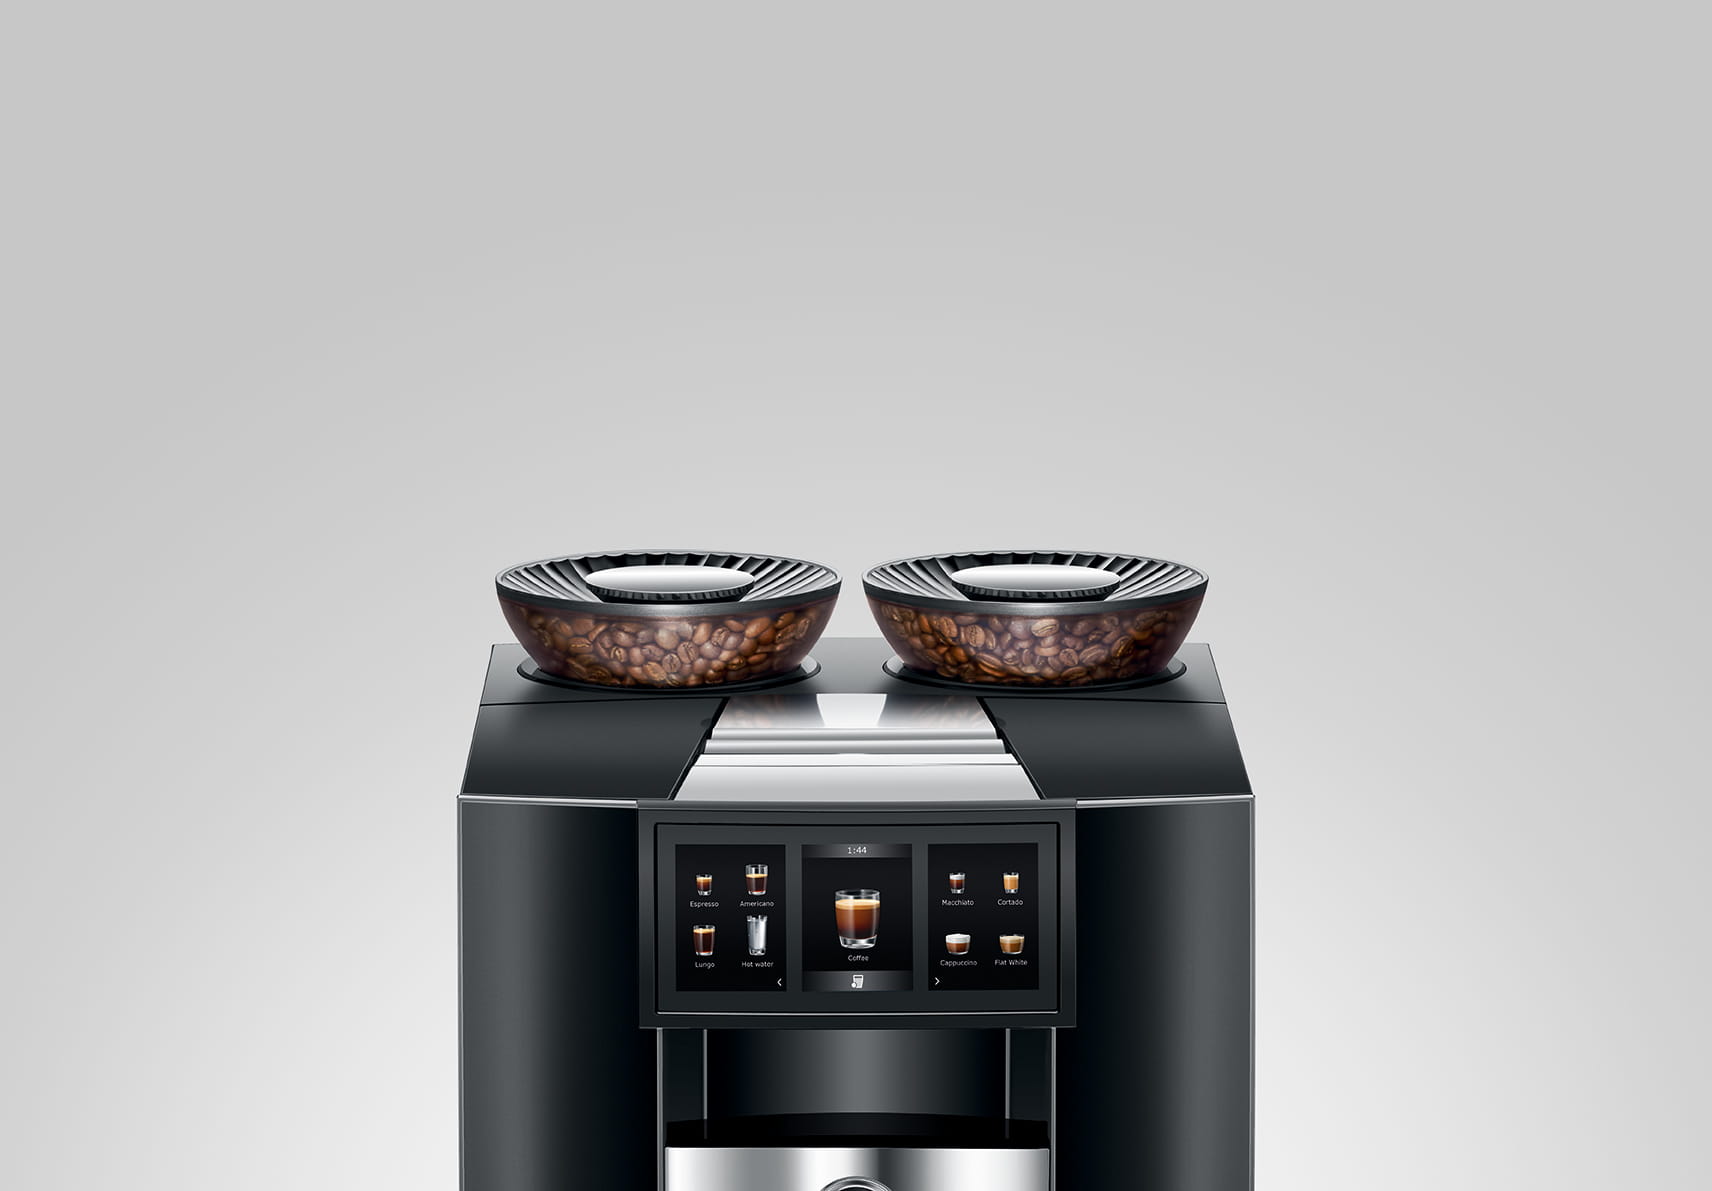 Jura Giga 10 Professional Superautomatic Espresso Machine